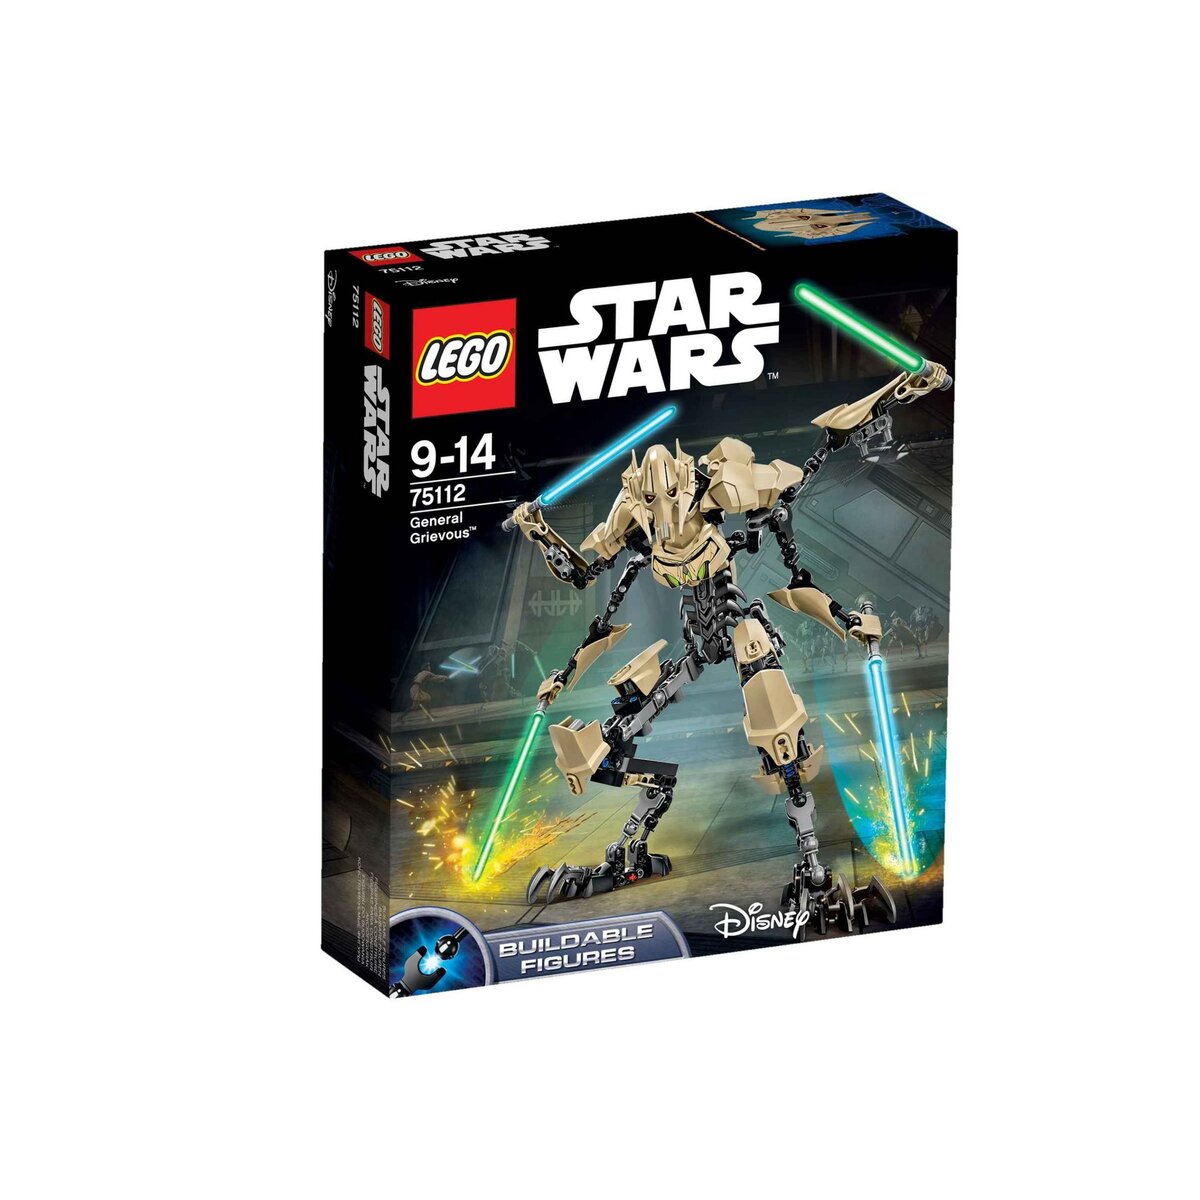 LEGO Star Wars 75112 - General Grievous